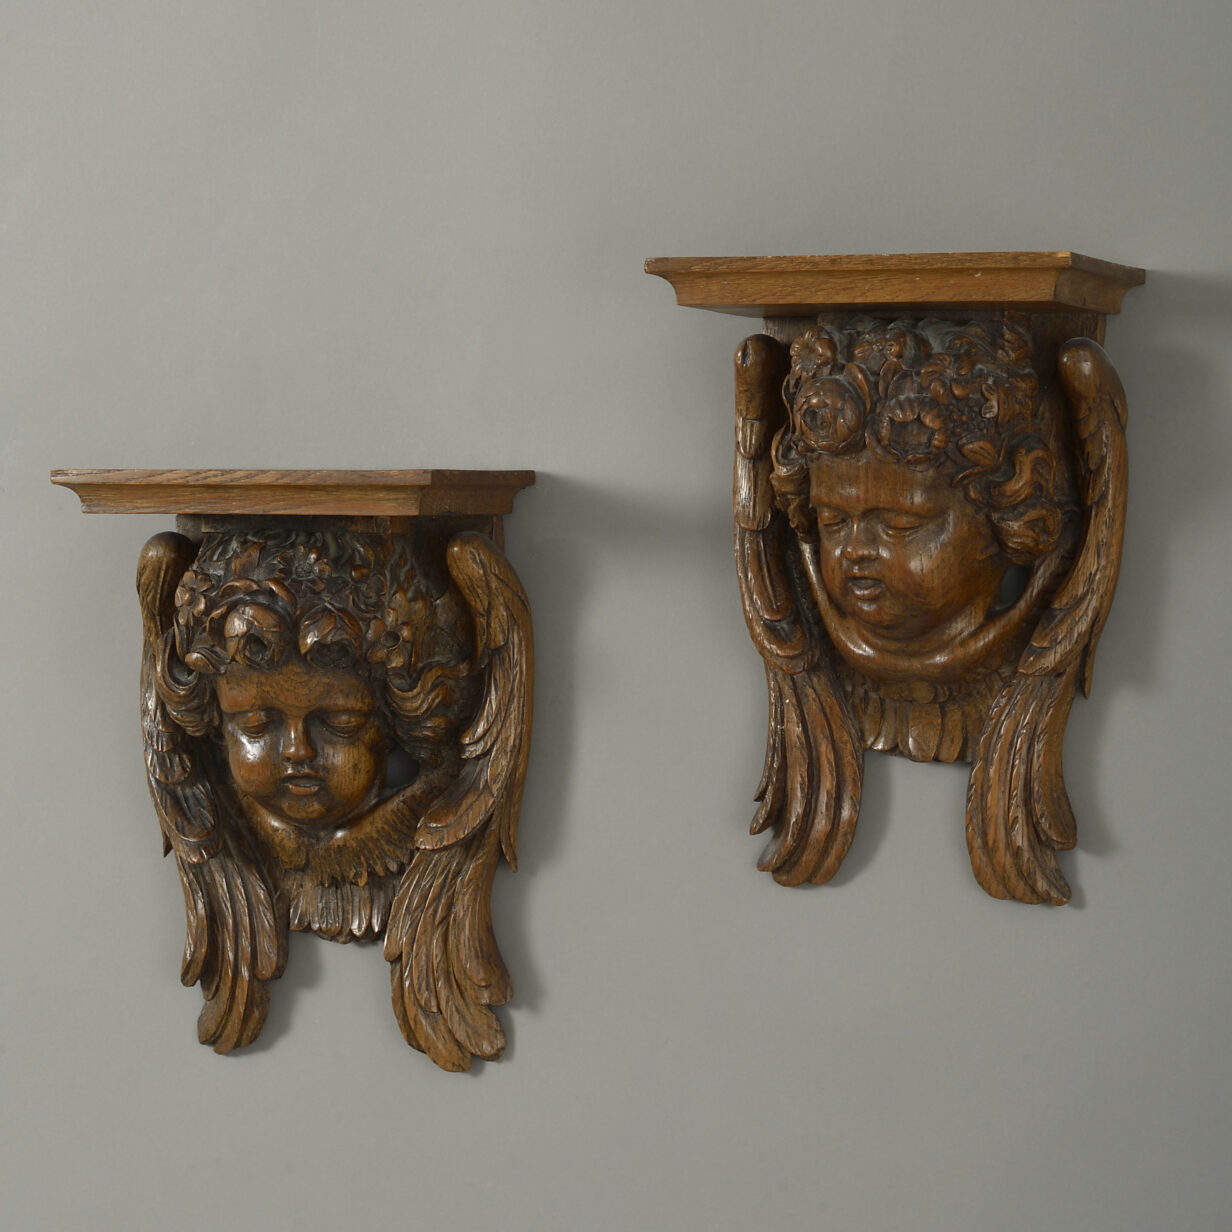 Pair of 19th century carved wooden cherub wall brackets